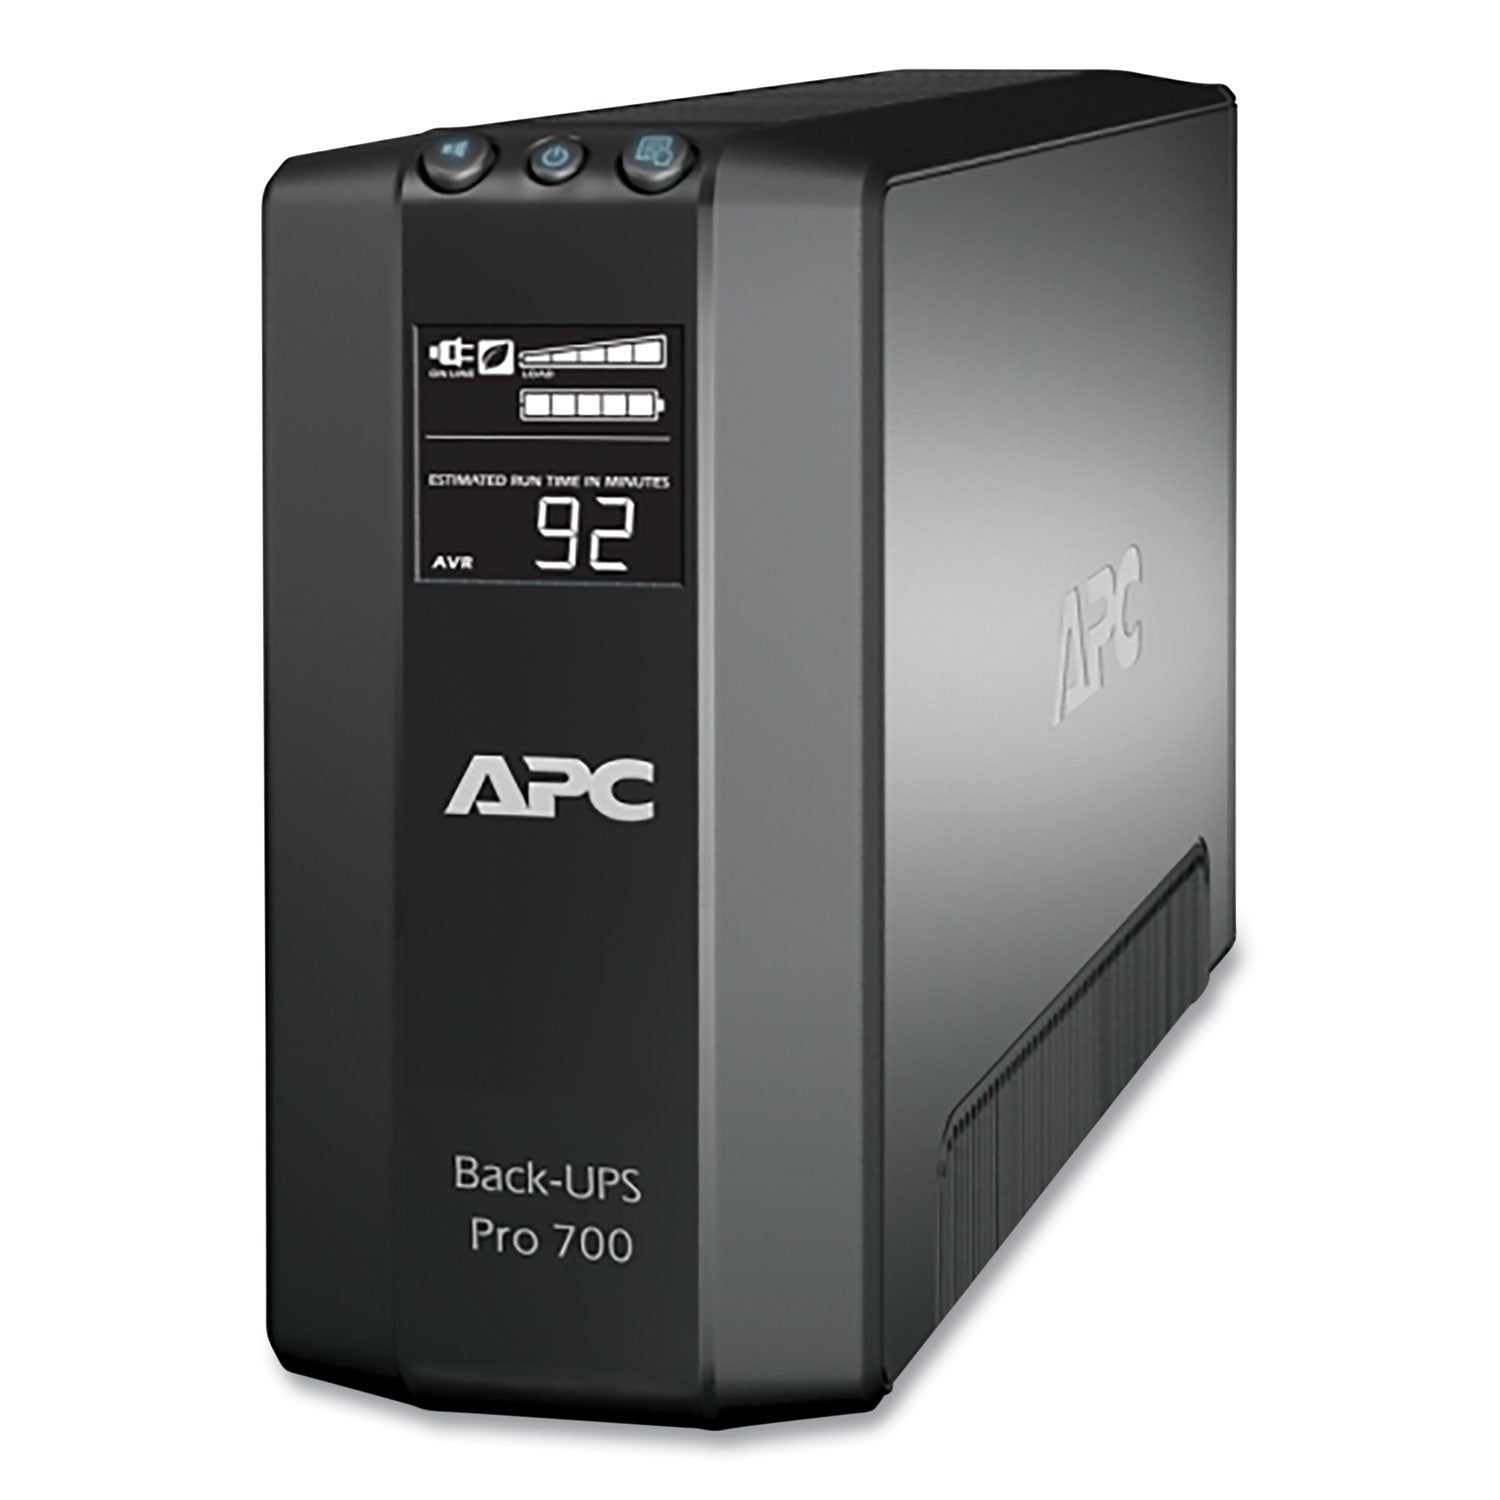 BR700G Back-UPS Pro 700 Battery Backup System, 6 Outlets, 700 VA, 355 J - 